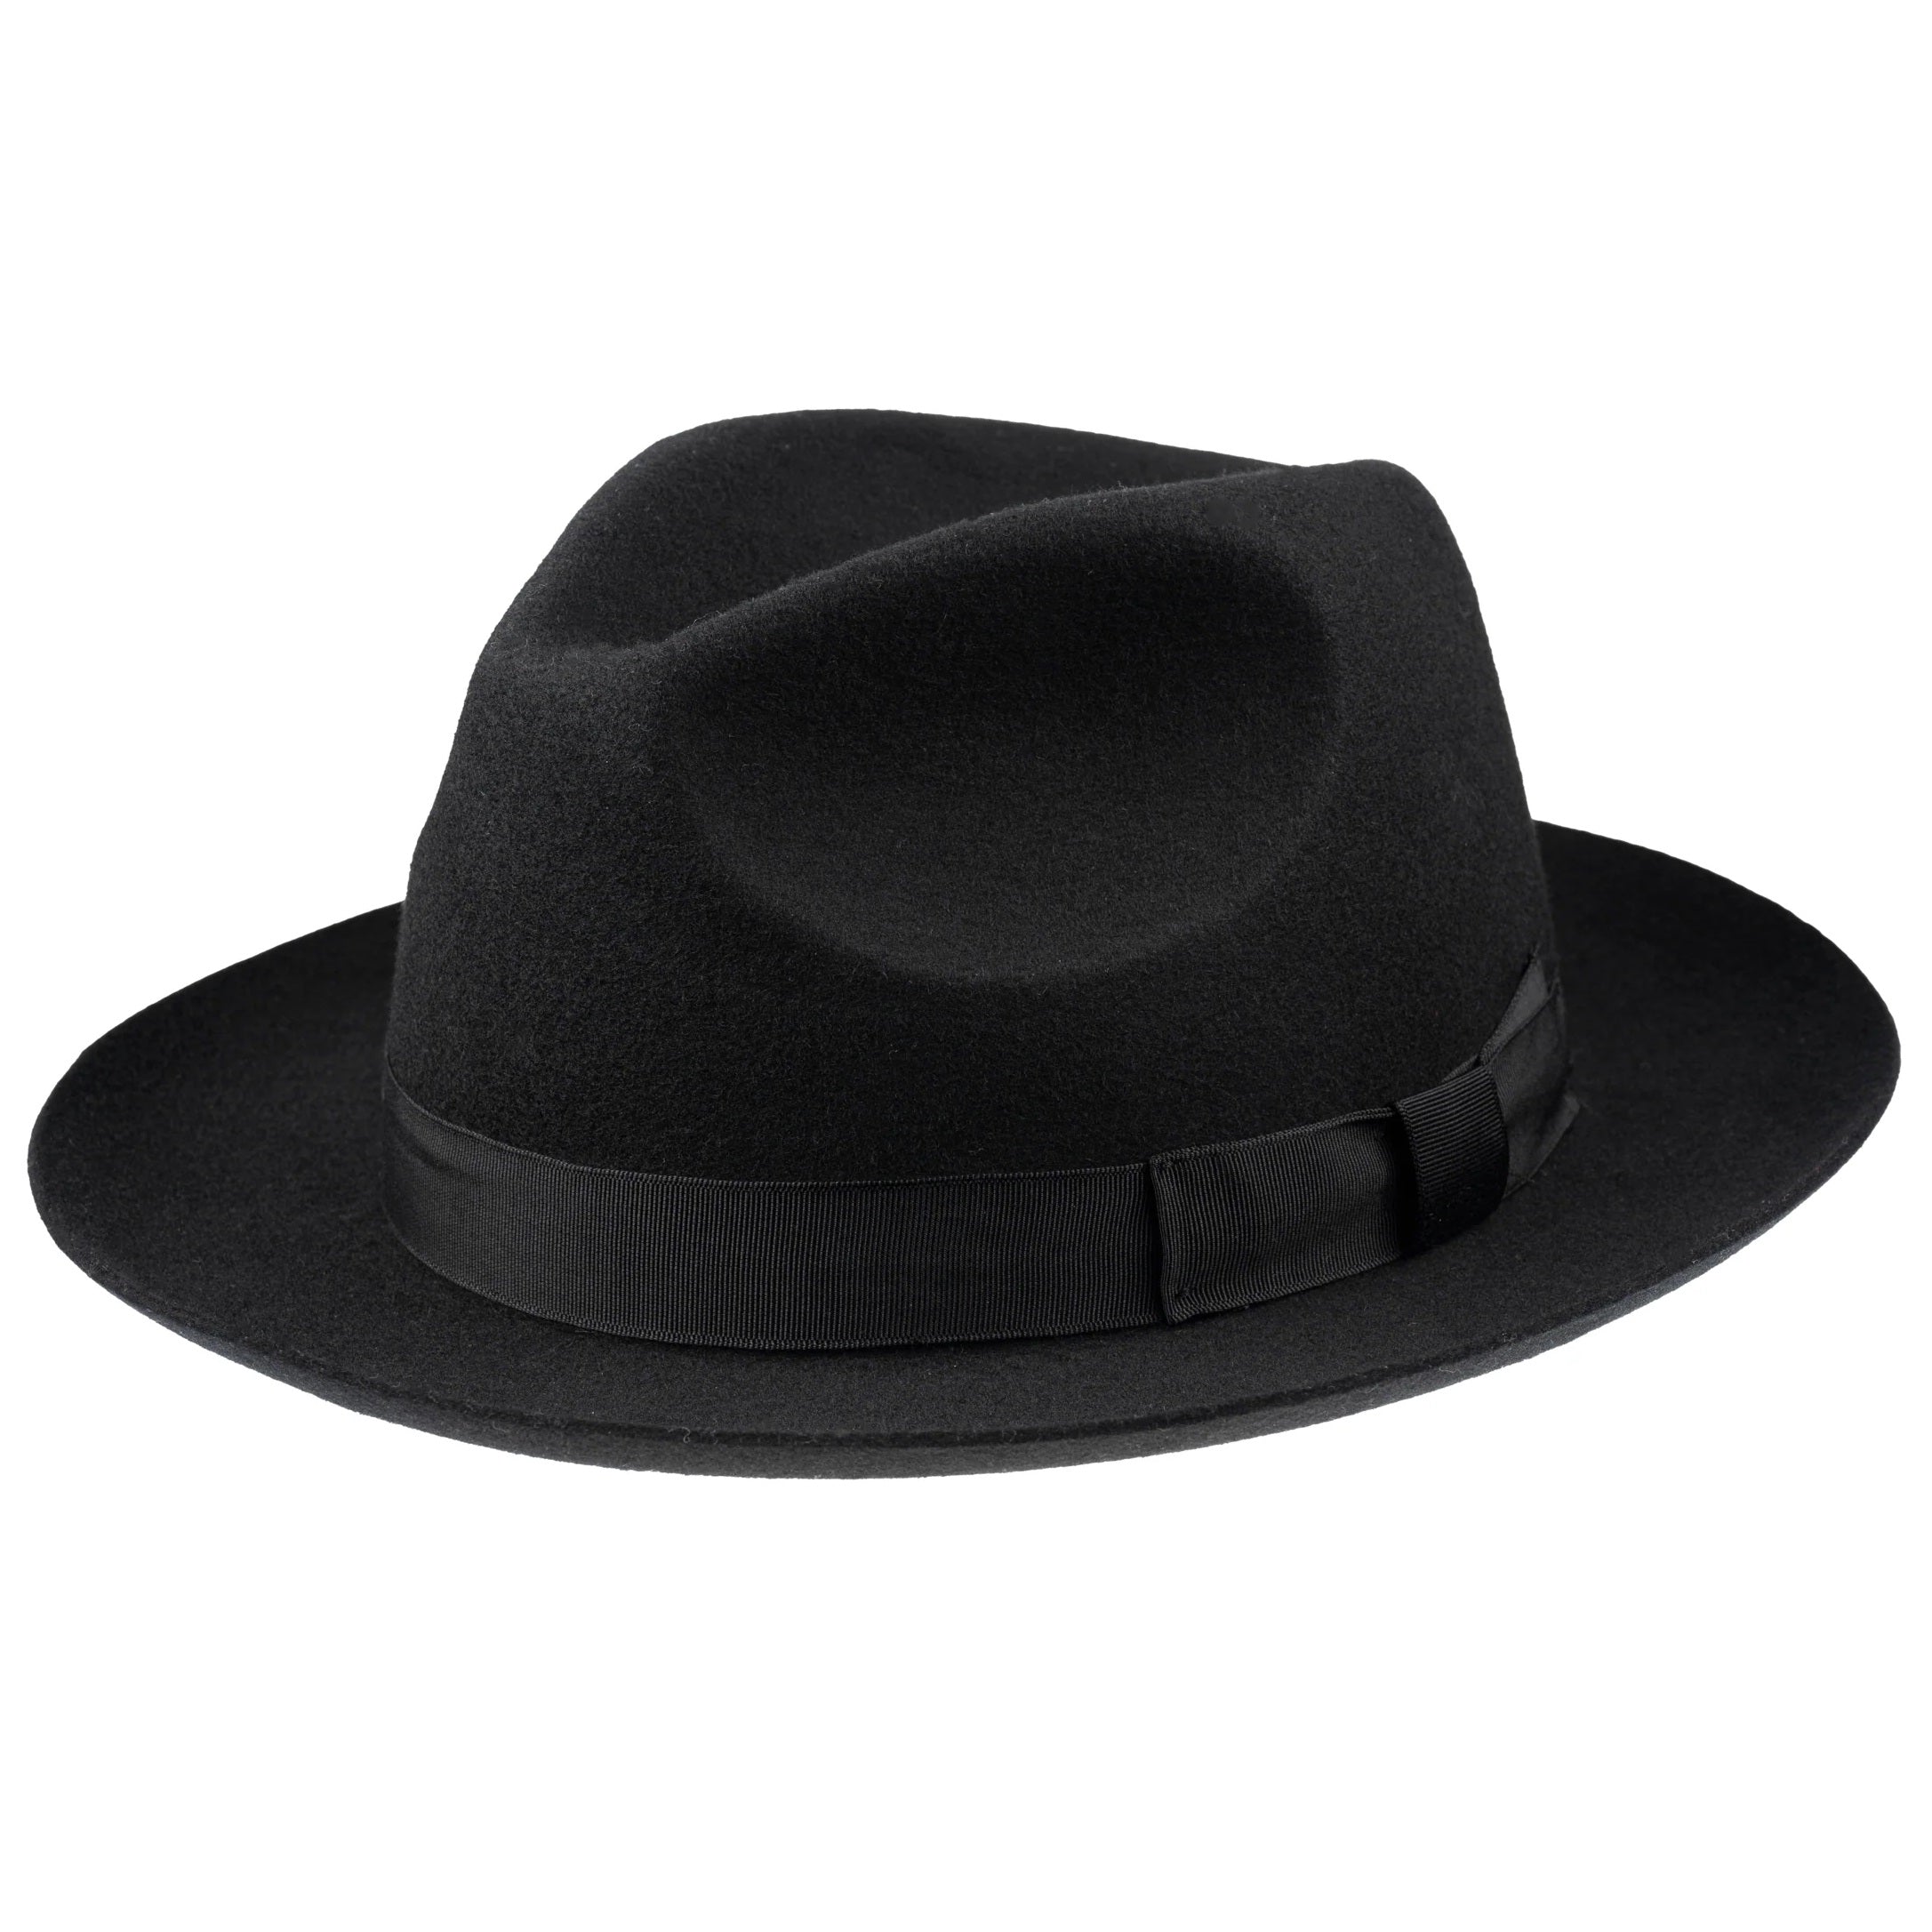 CHRISTYS' Chepstow Wool Felt Fedora Hat - Black